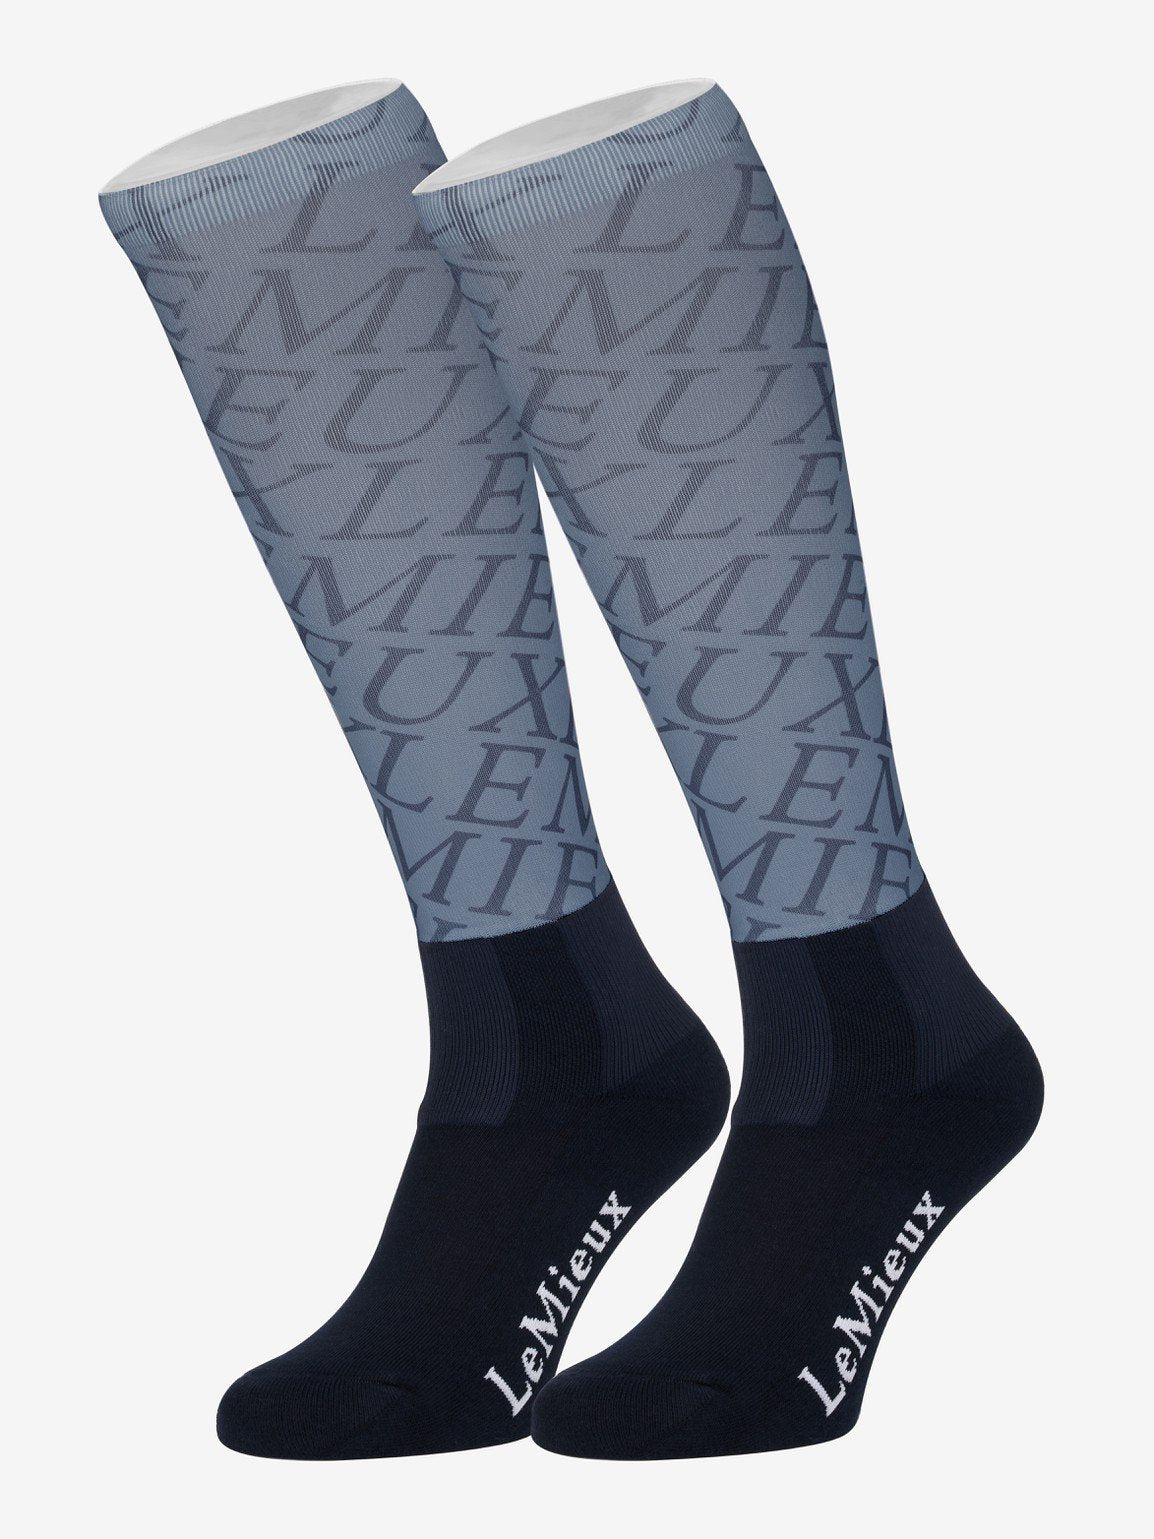 Lemieux Footsie Socks - Breeches.com